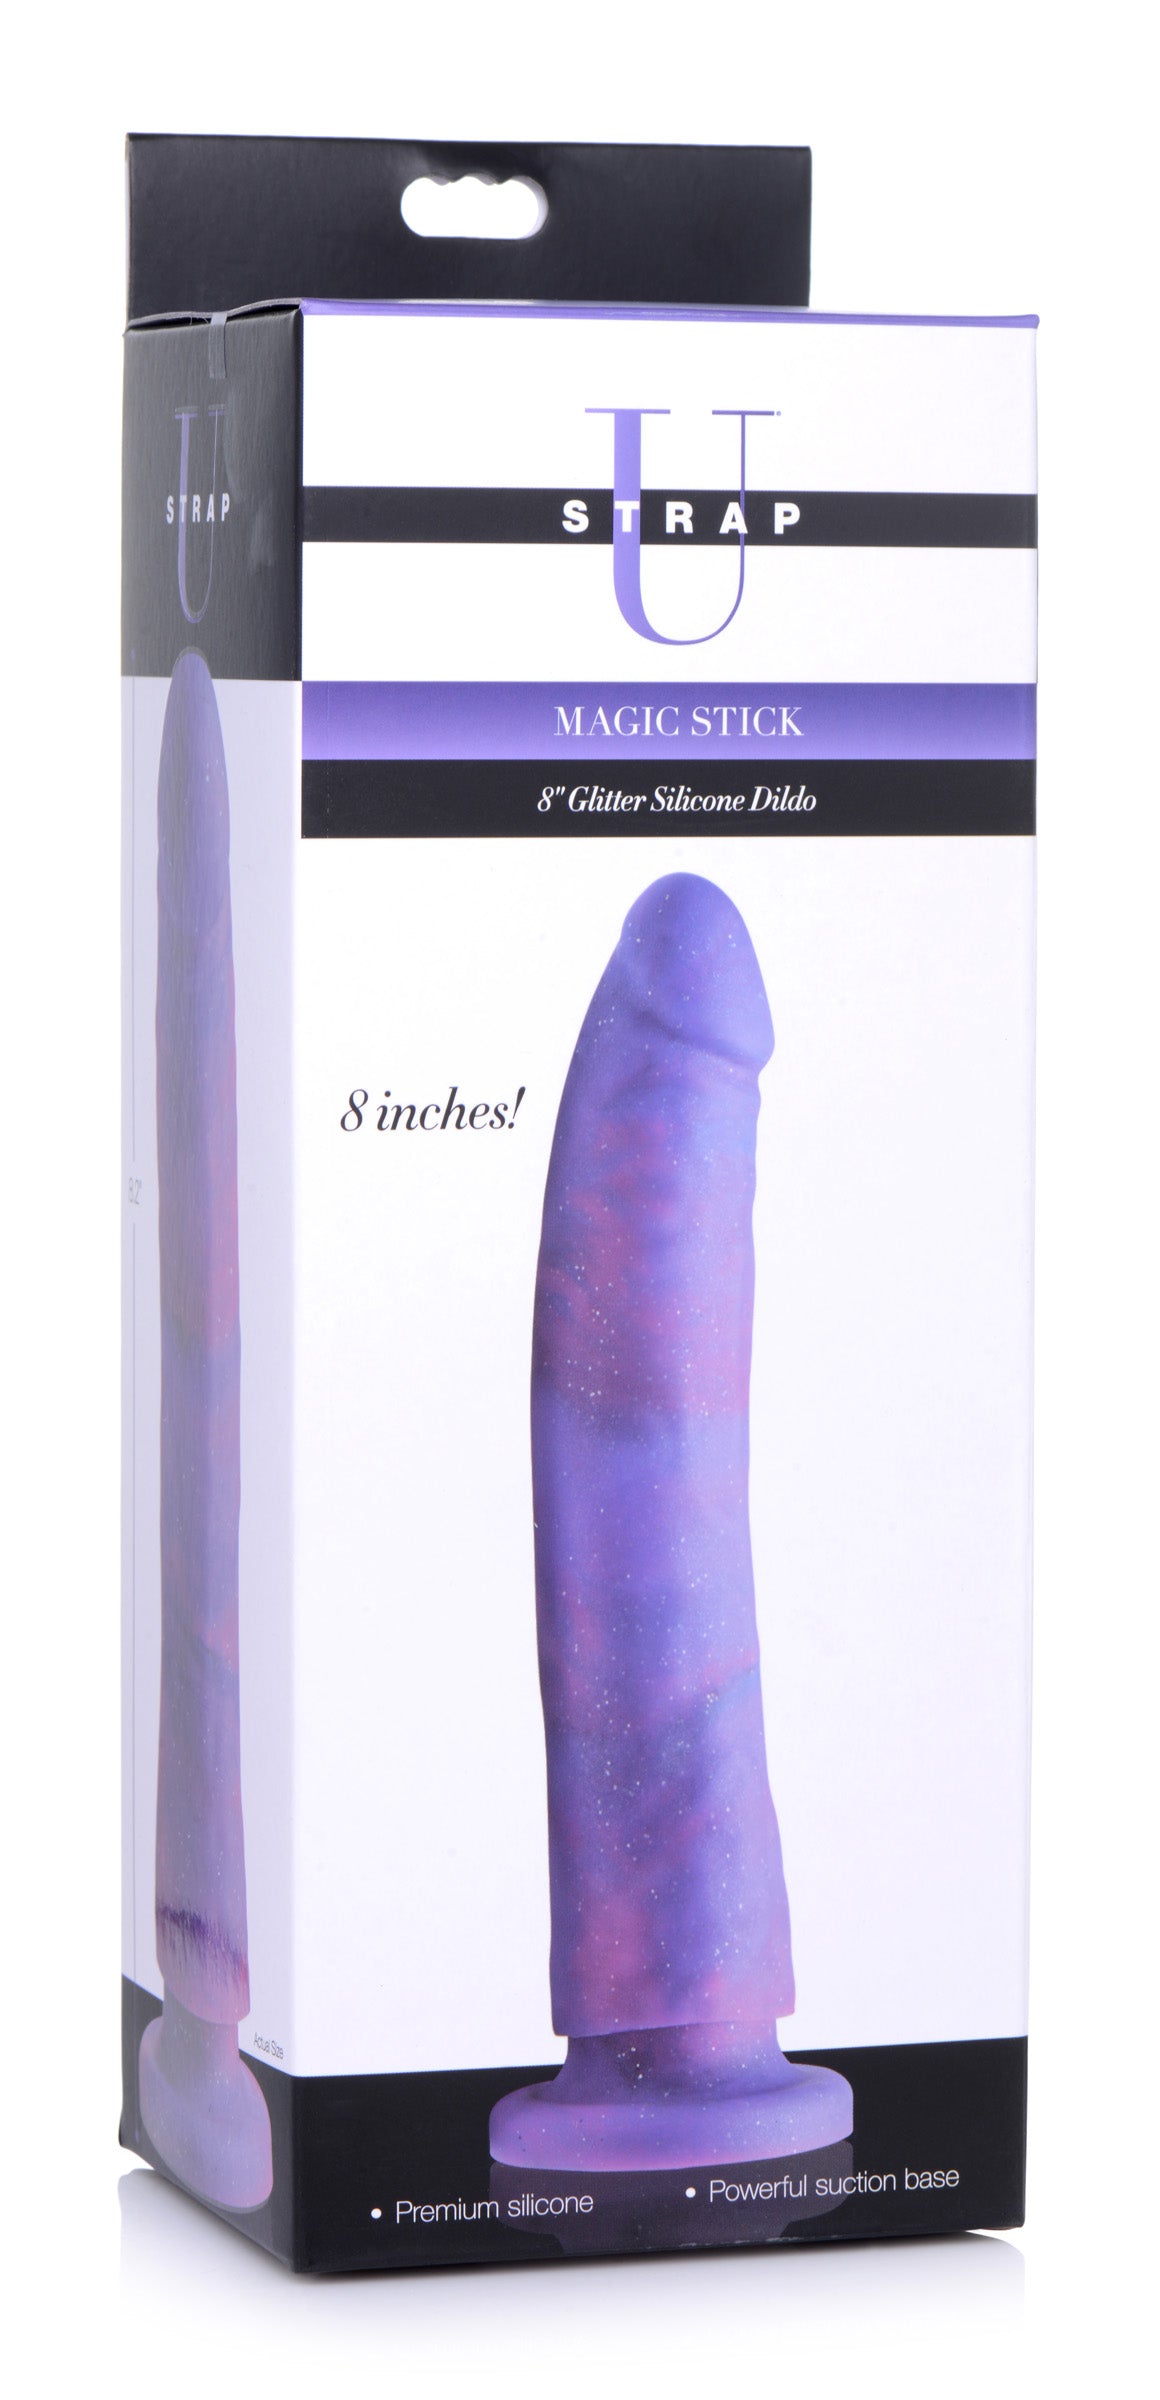 Magic Stick Glitter Silicone Dildo - 8 Inch - UABDSM